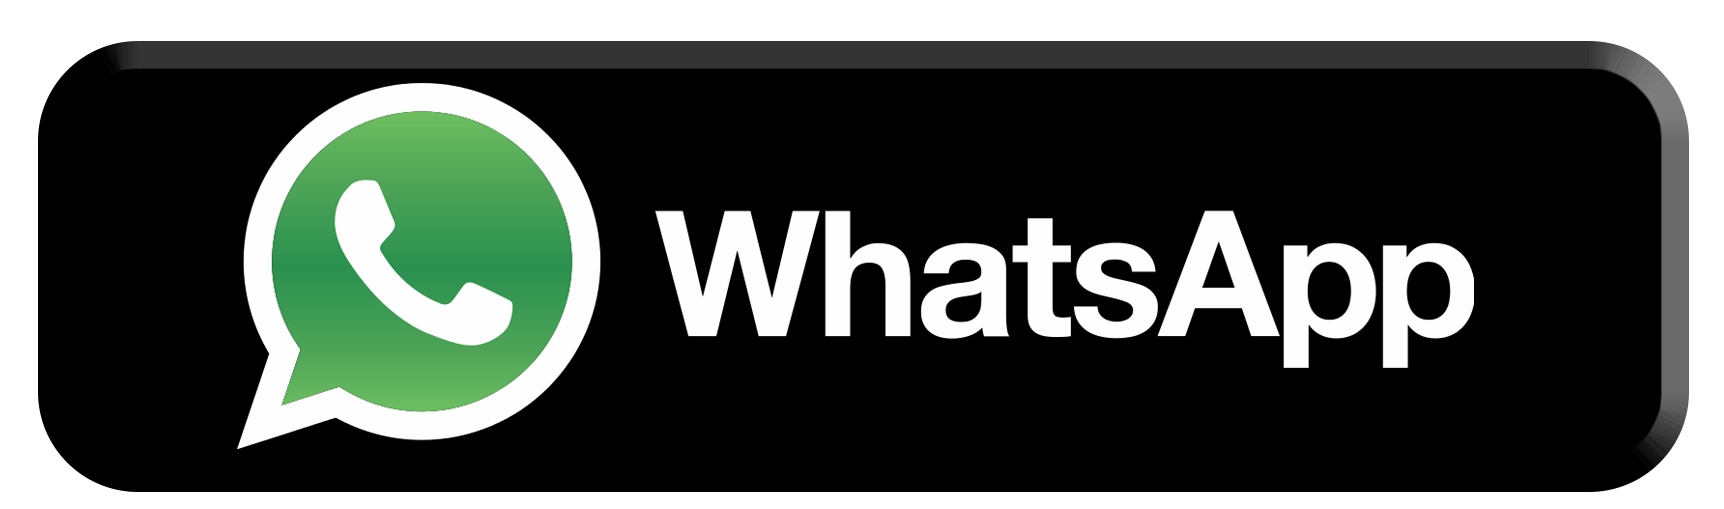 logo-whatsapp-png-transparente-02